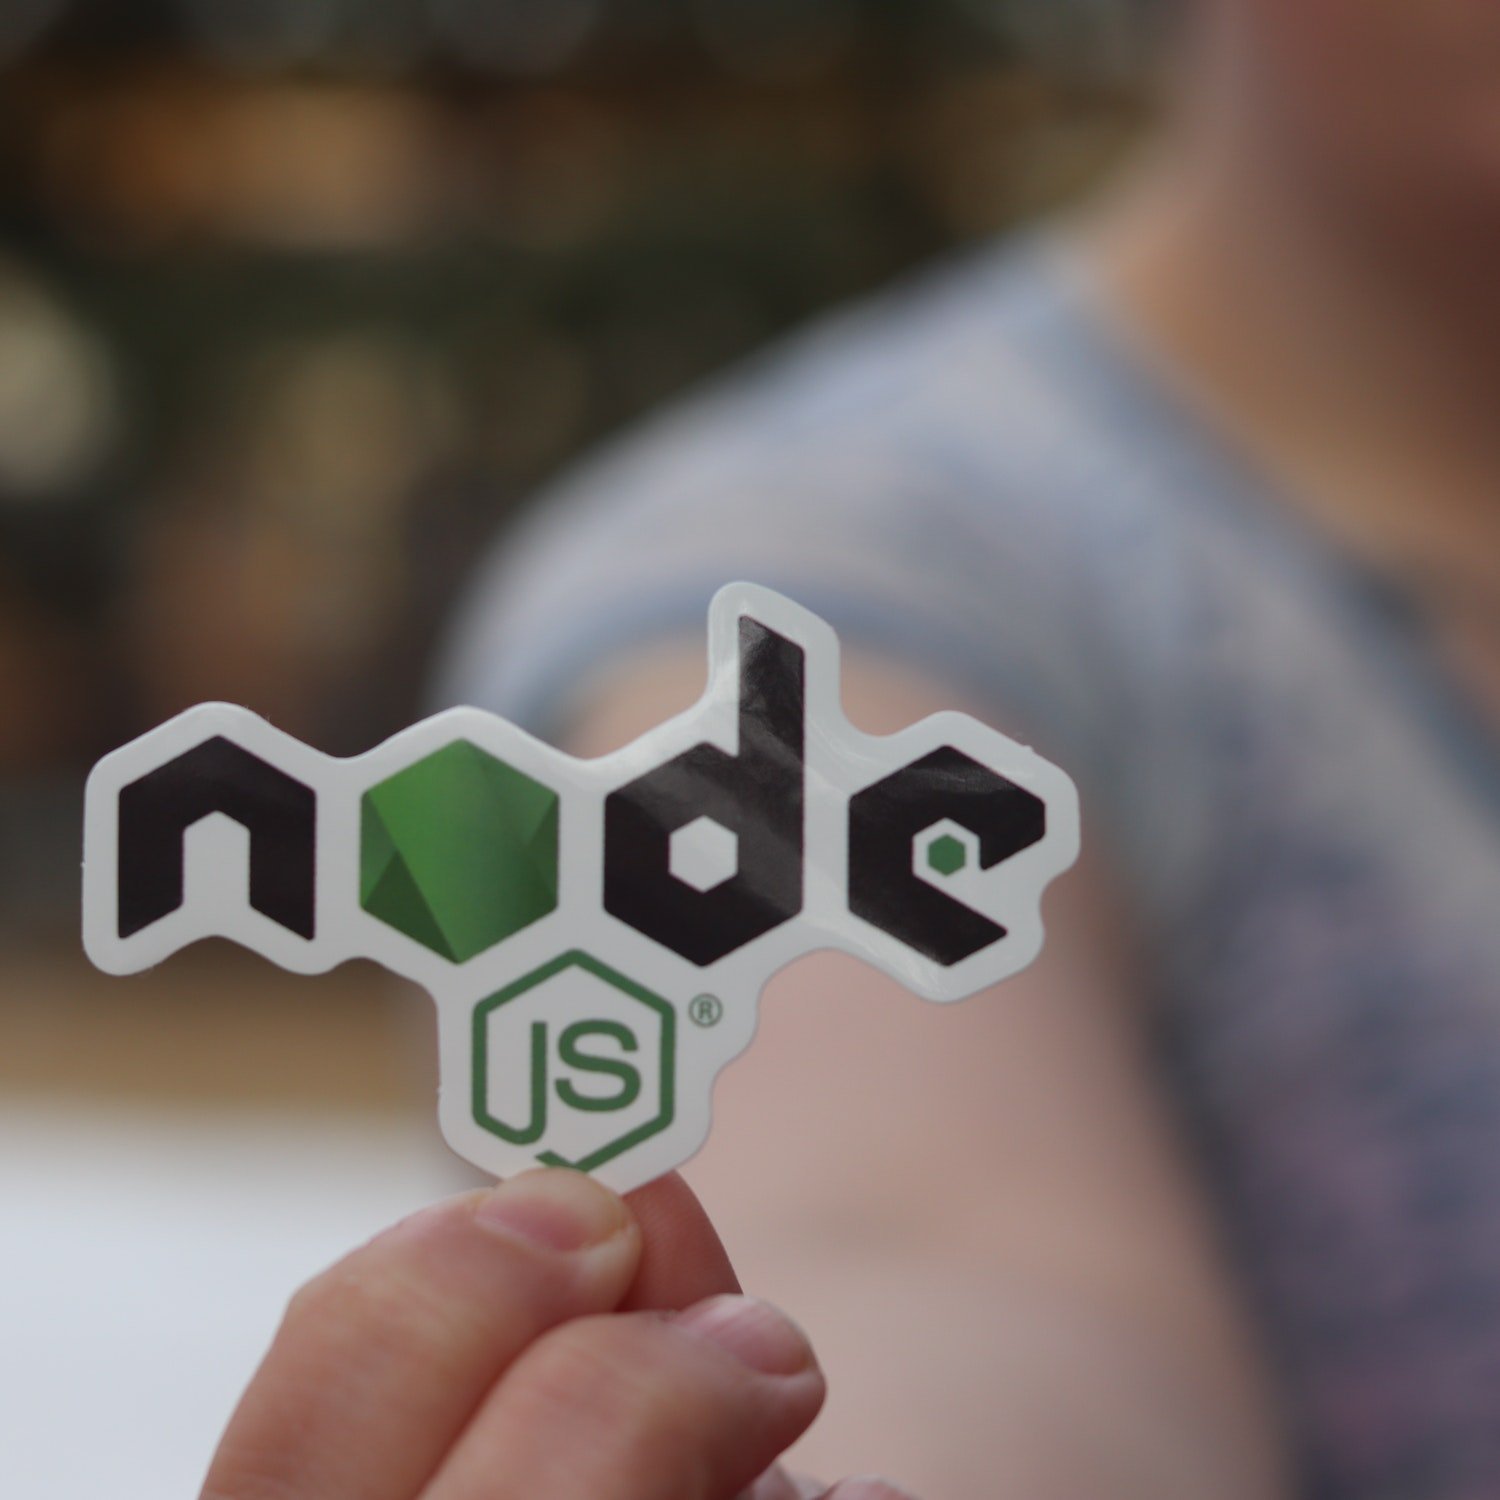 Expert Node.js software development services for scalable applications